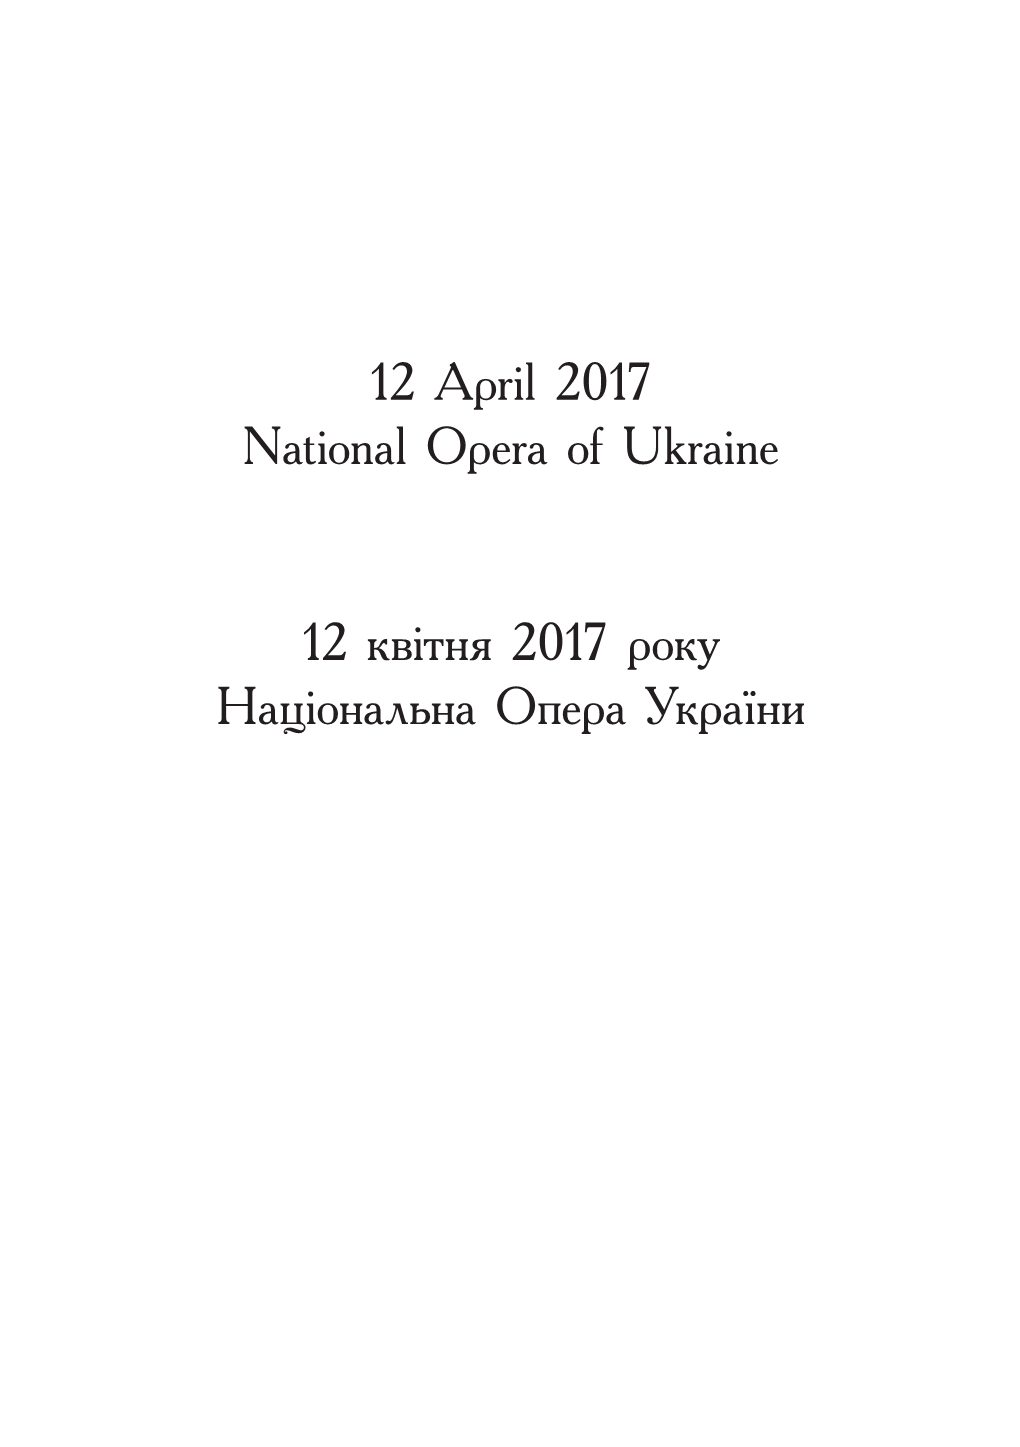 12 April 2017 National Opera of Ukraine 12 *"Iт…Я 2017 !%*3 M=Цi